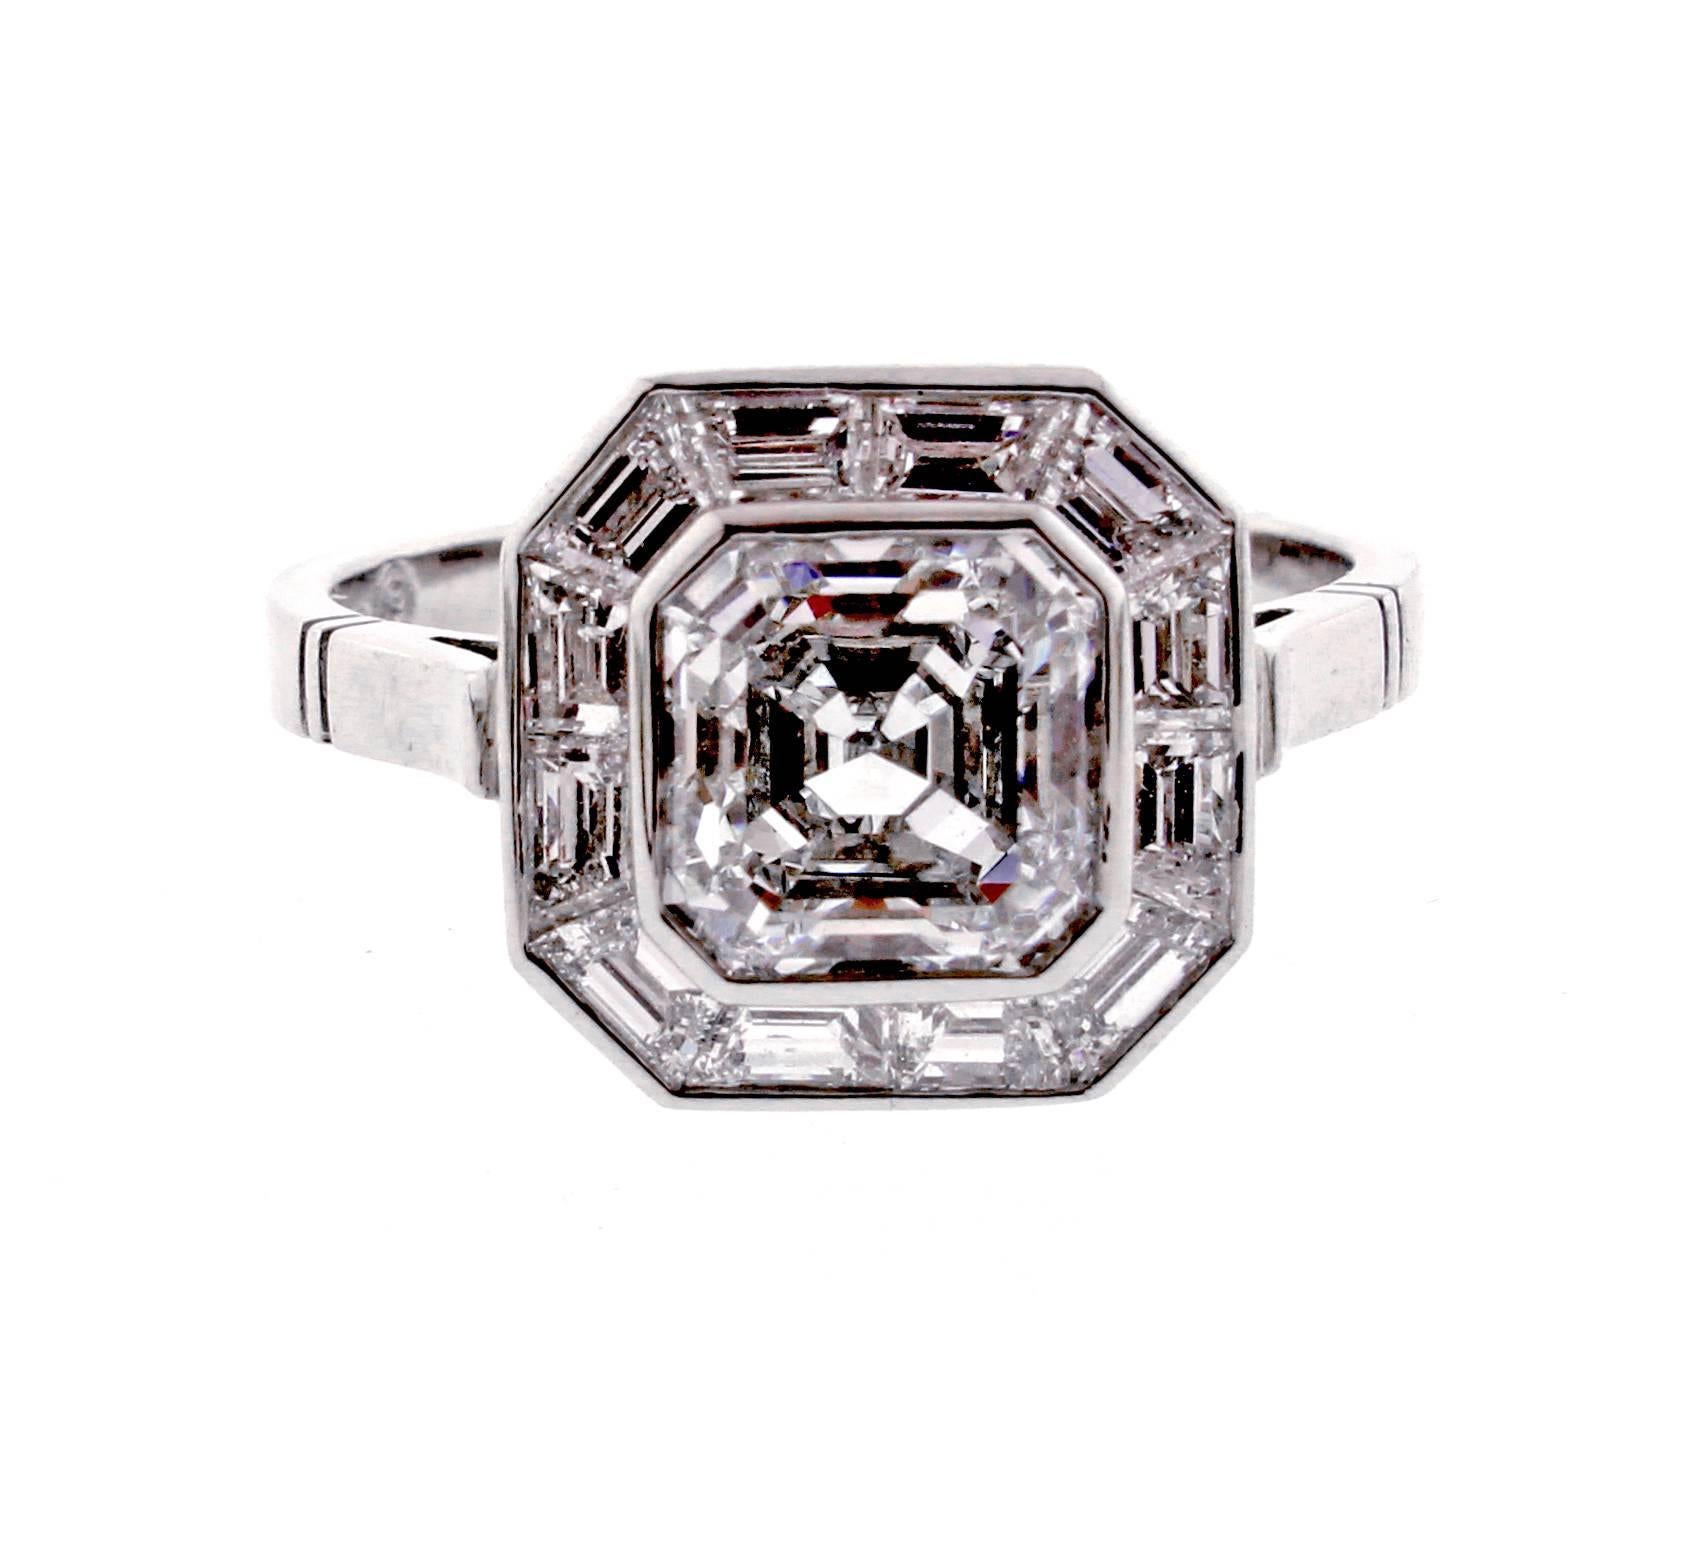 Pippa Middleton Style Asscher Cut Diamond Engagement Ring 1